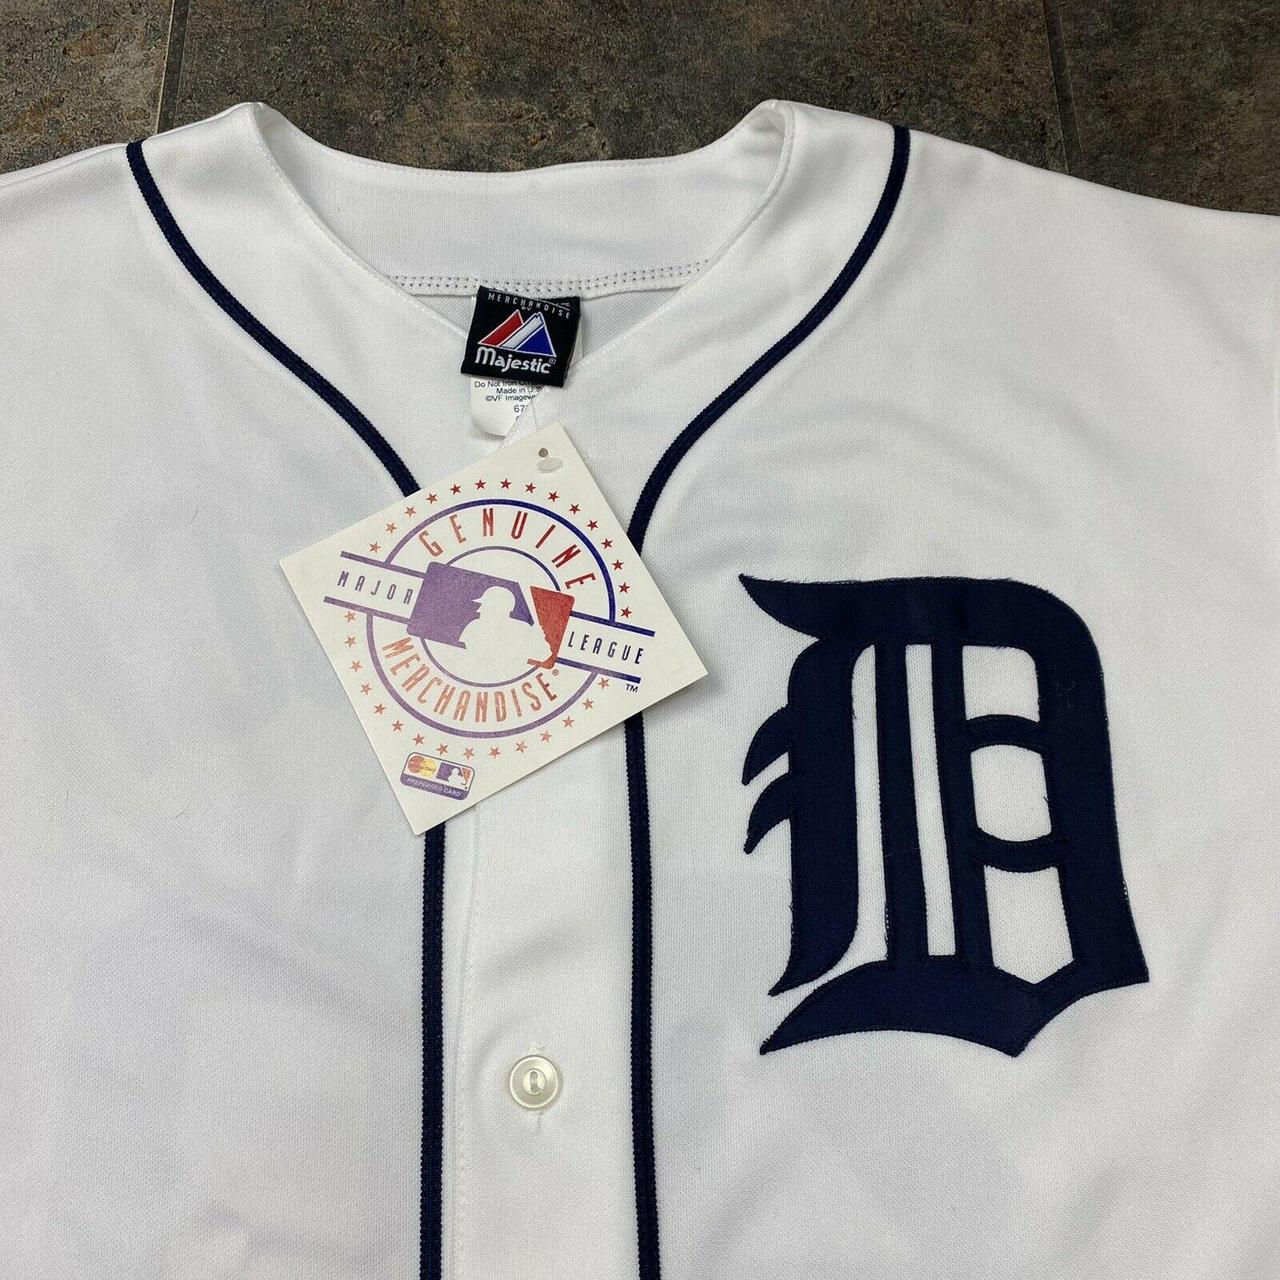 MLB Detroit Tigers Nike Embroidered Baseball Jersey - Depop